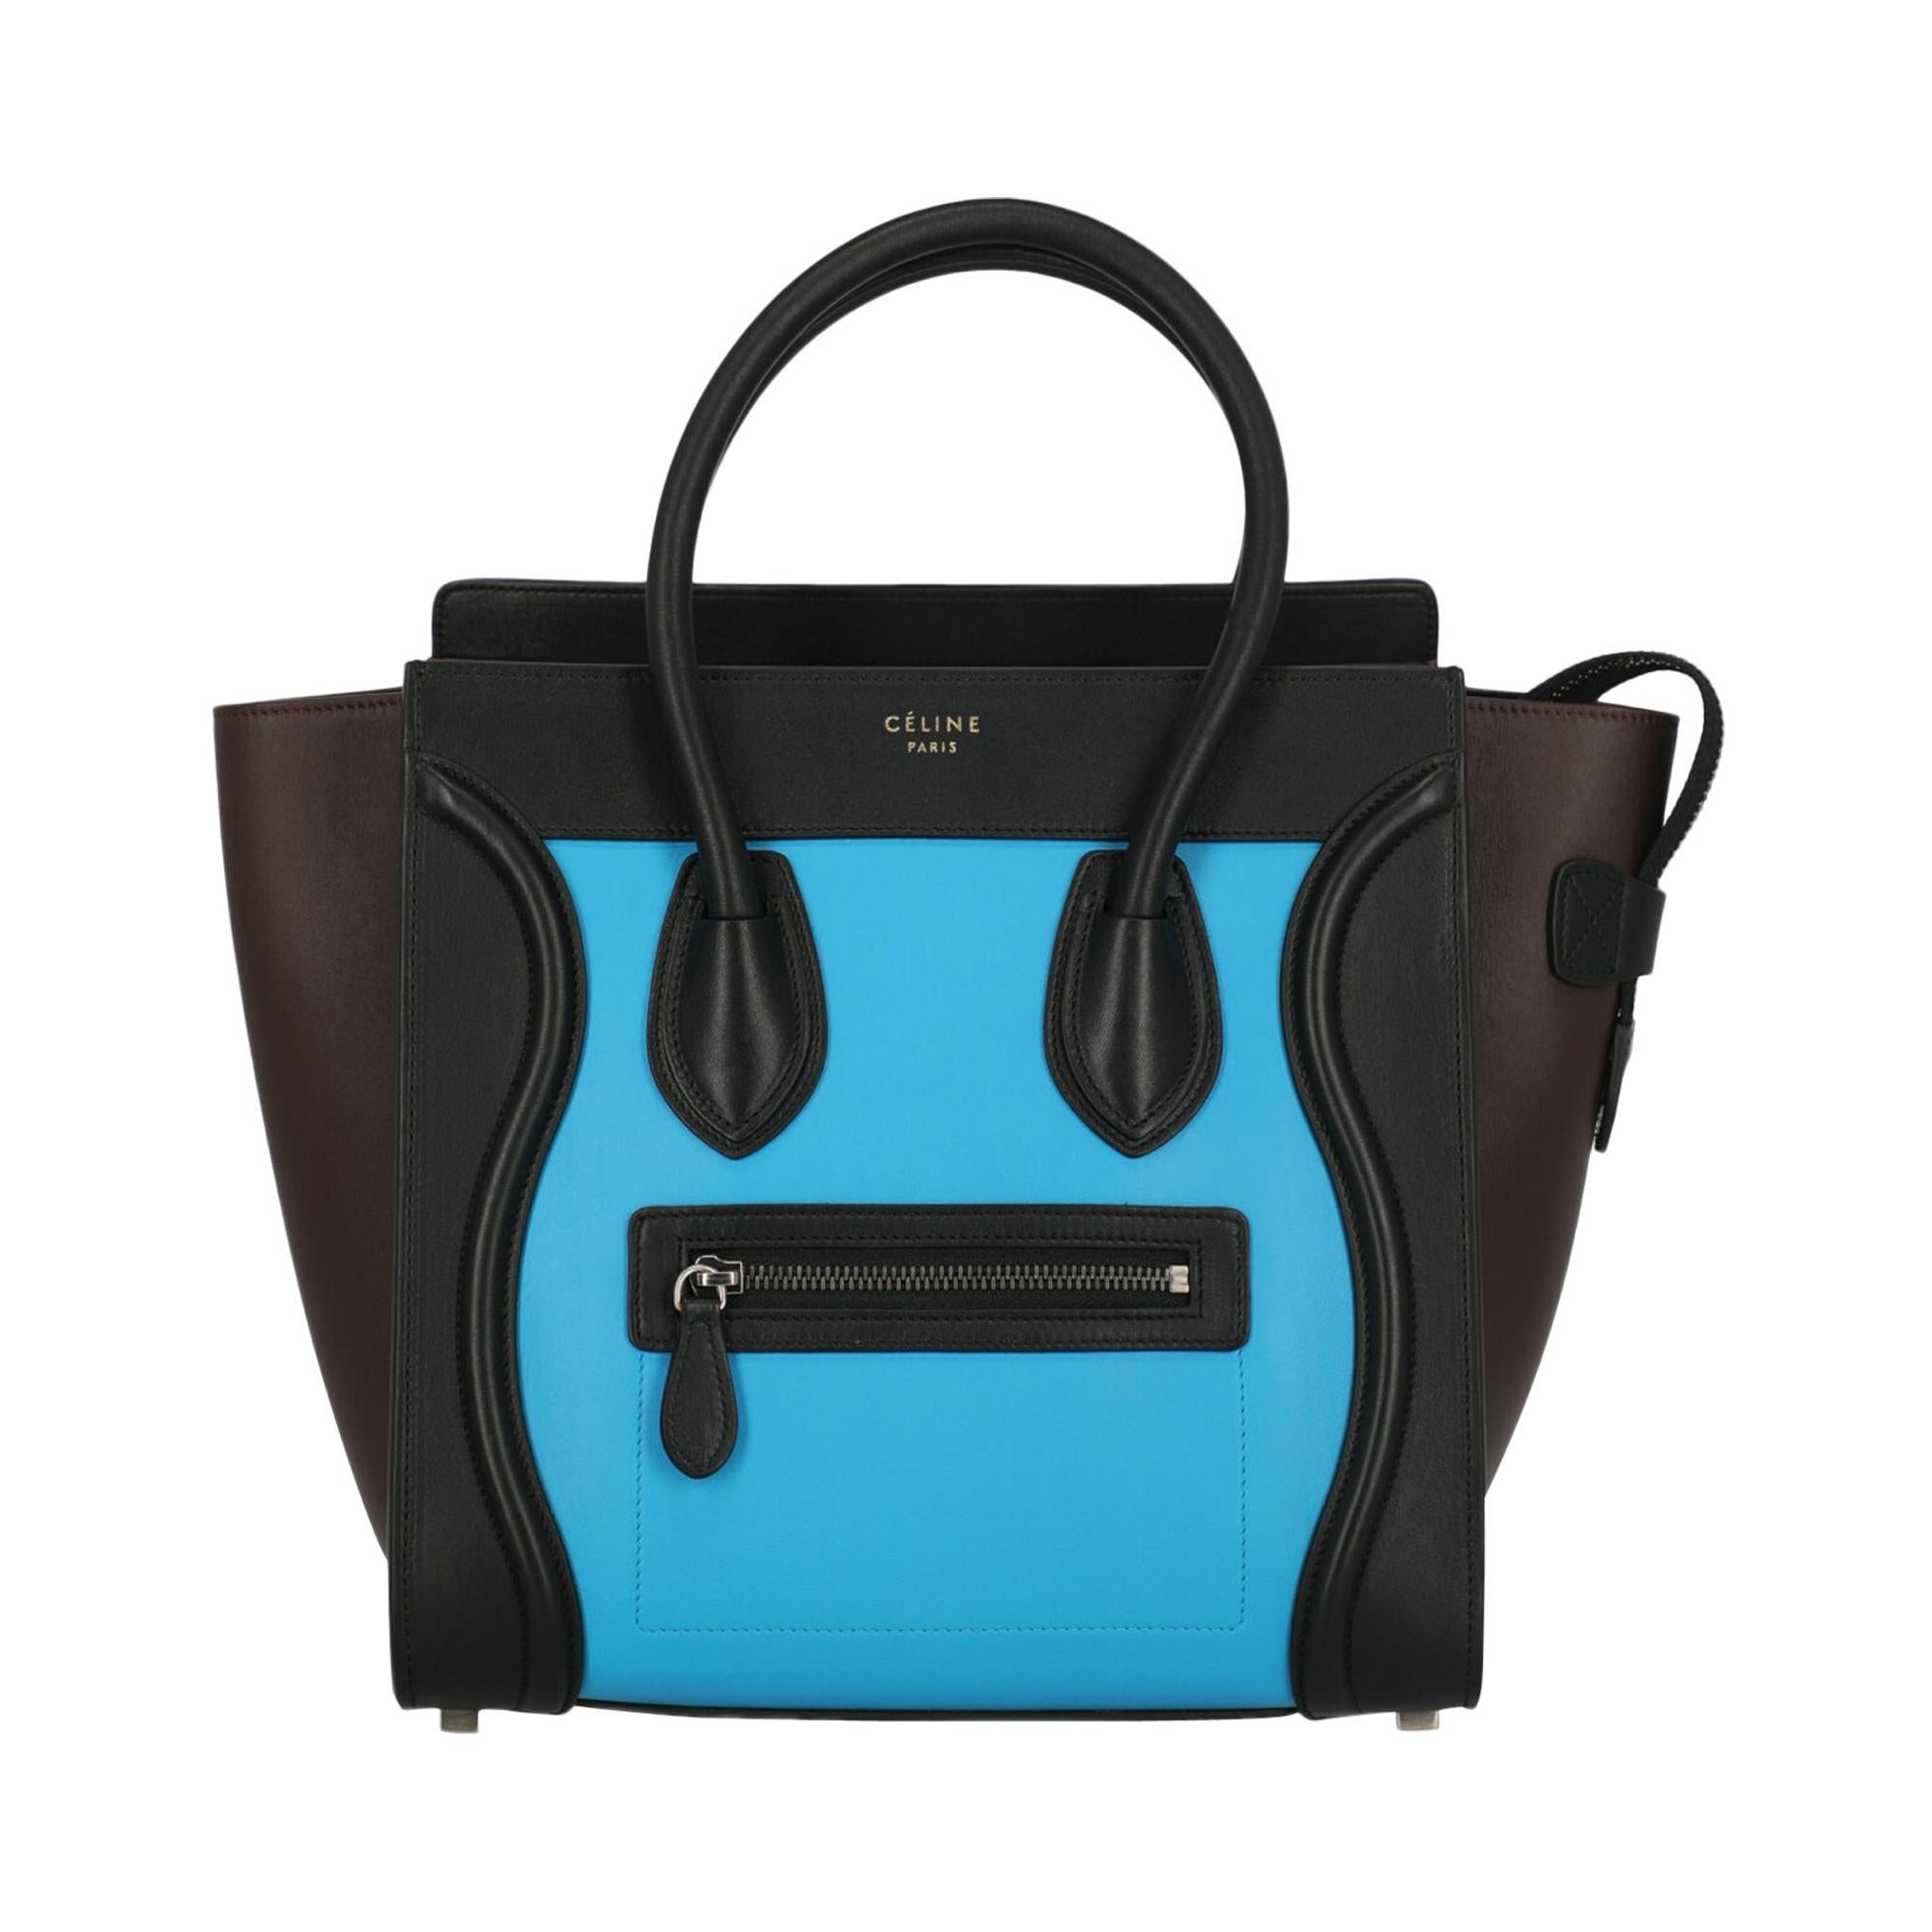 Celine Women's Handbag Luggage Black/Blue/Burgundy Leather For Sale